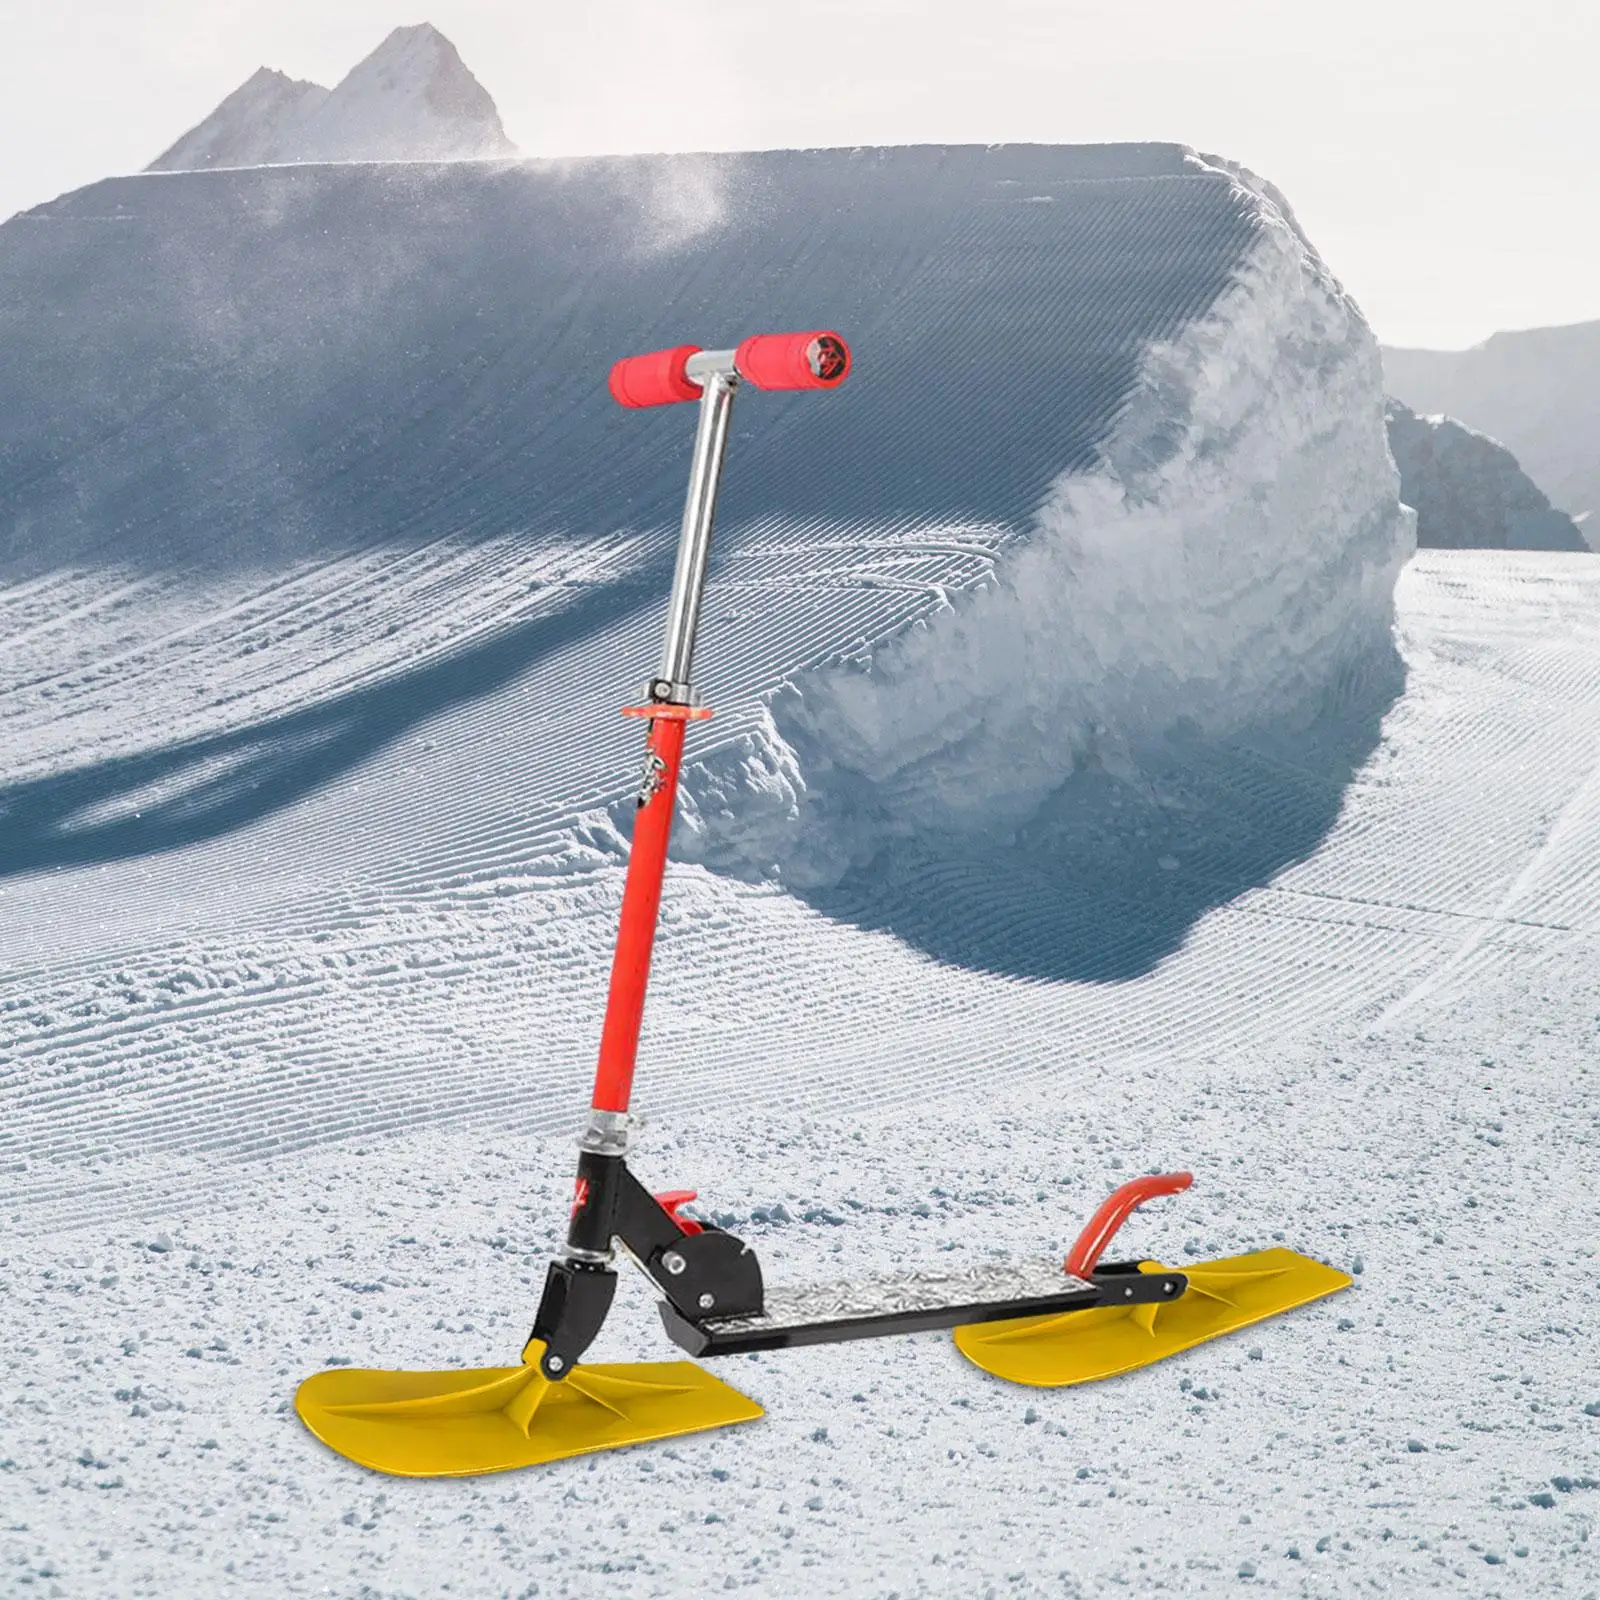 2Pcs Snow Sled Ski Scooter Kit Easy to Install Ski Sledge Board for Christmas